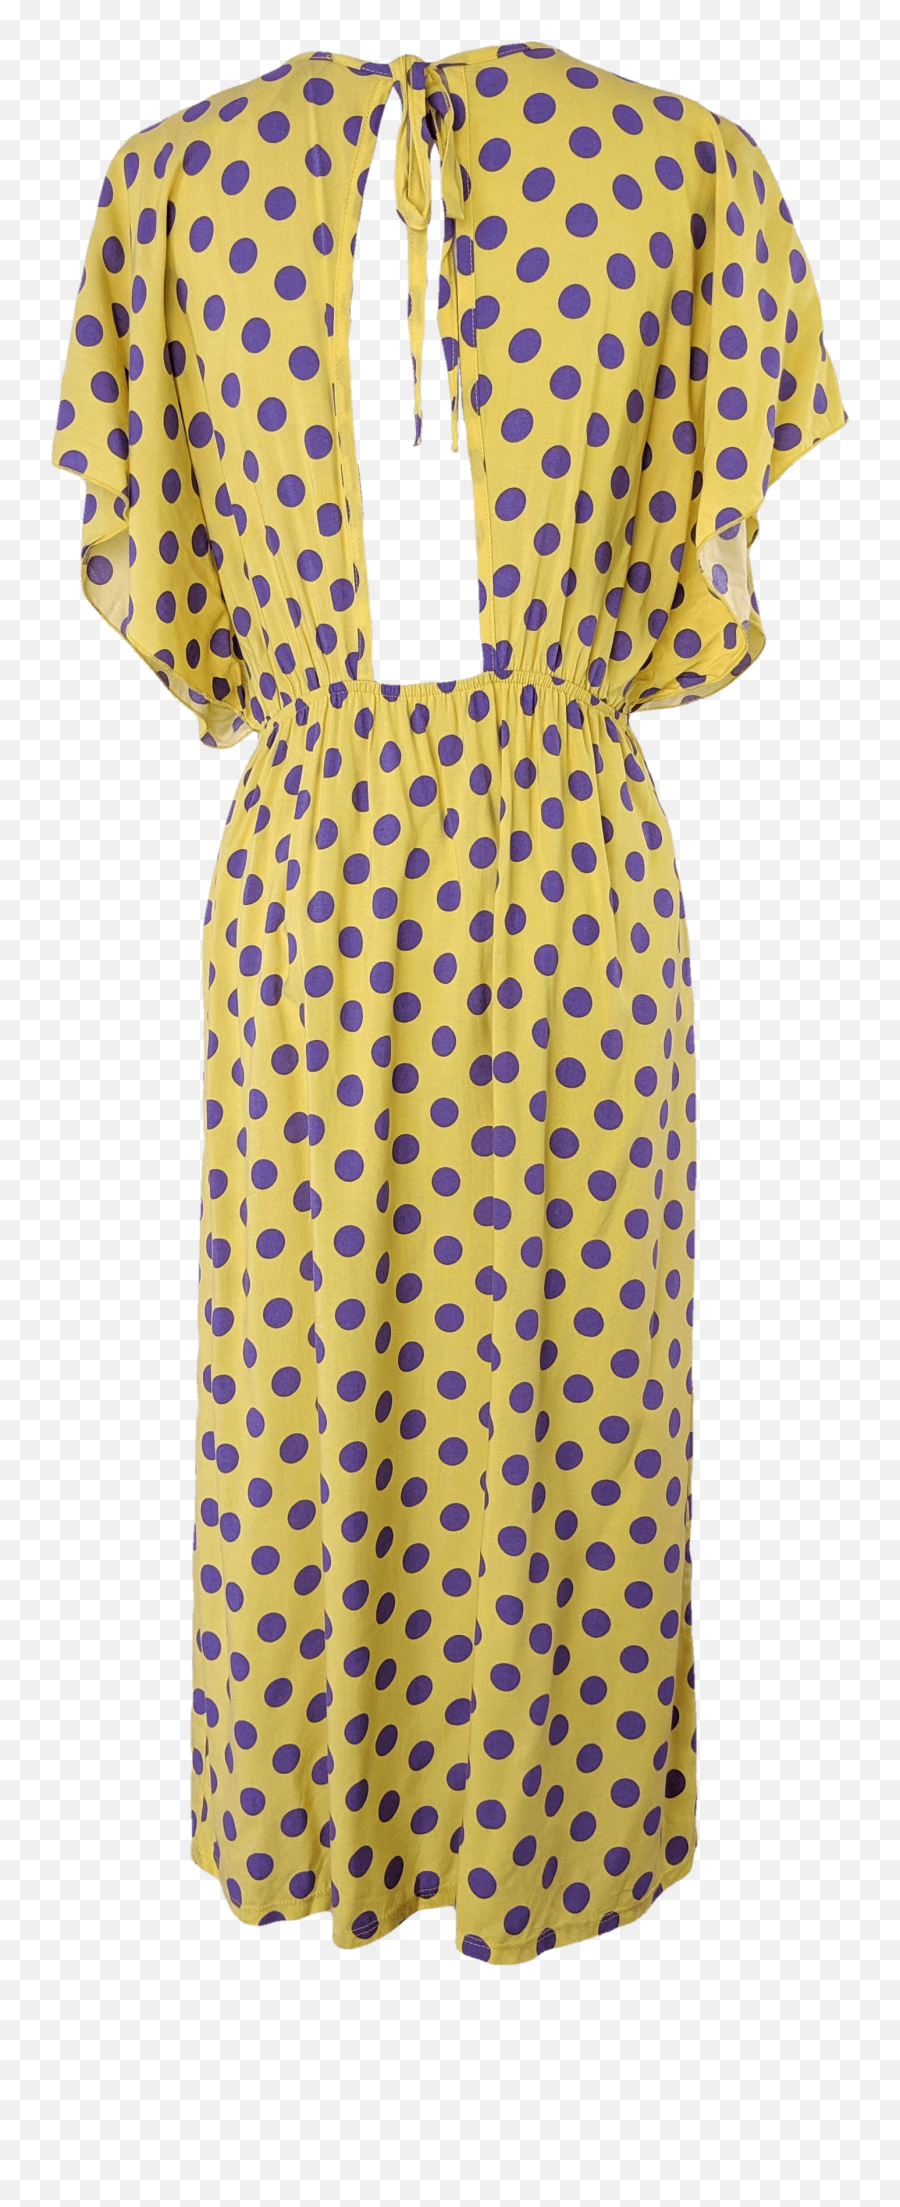 80u0027s Yellow Midi Dress With Purple Polka Dots And Elastic Waist By Funwear Factory - Asda Yellow Polka Dot Dress Png,50s Clothing Icon Icon